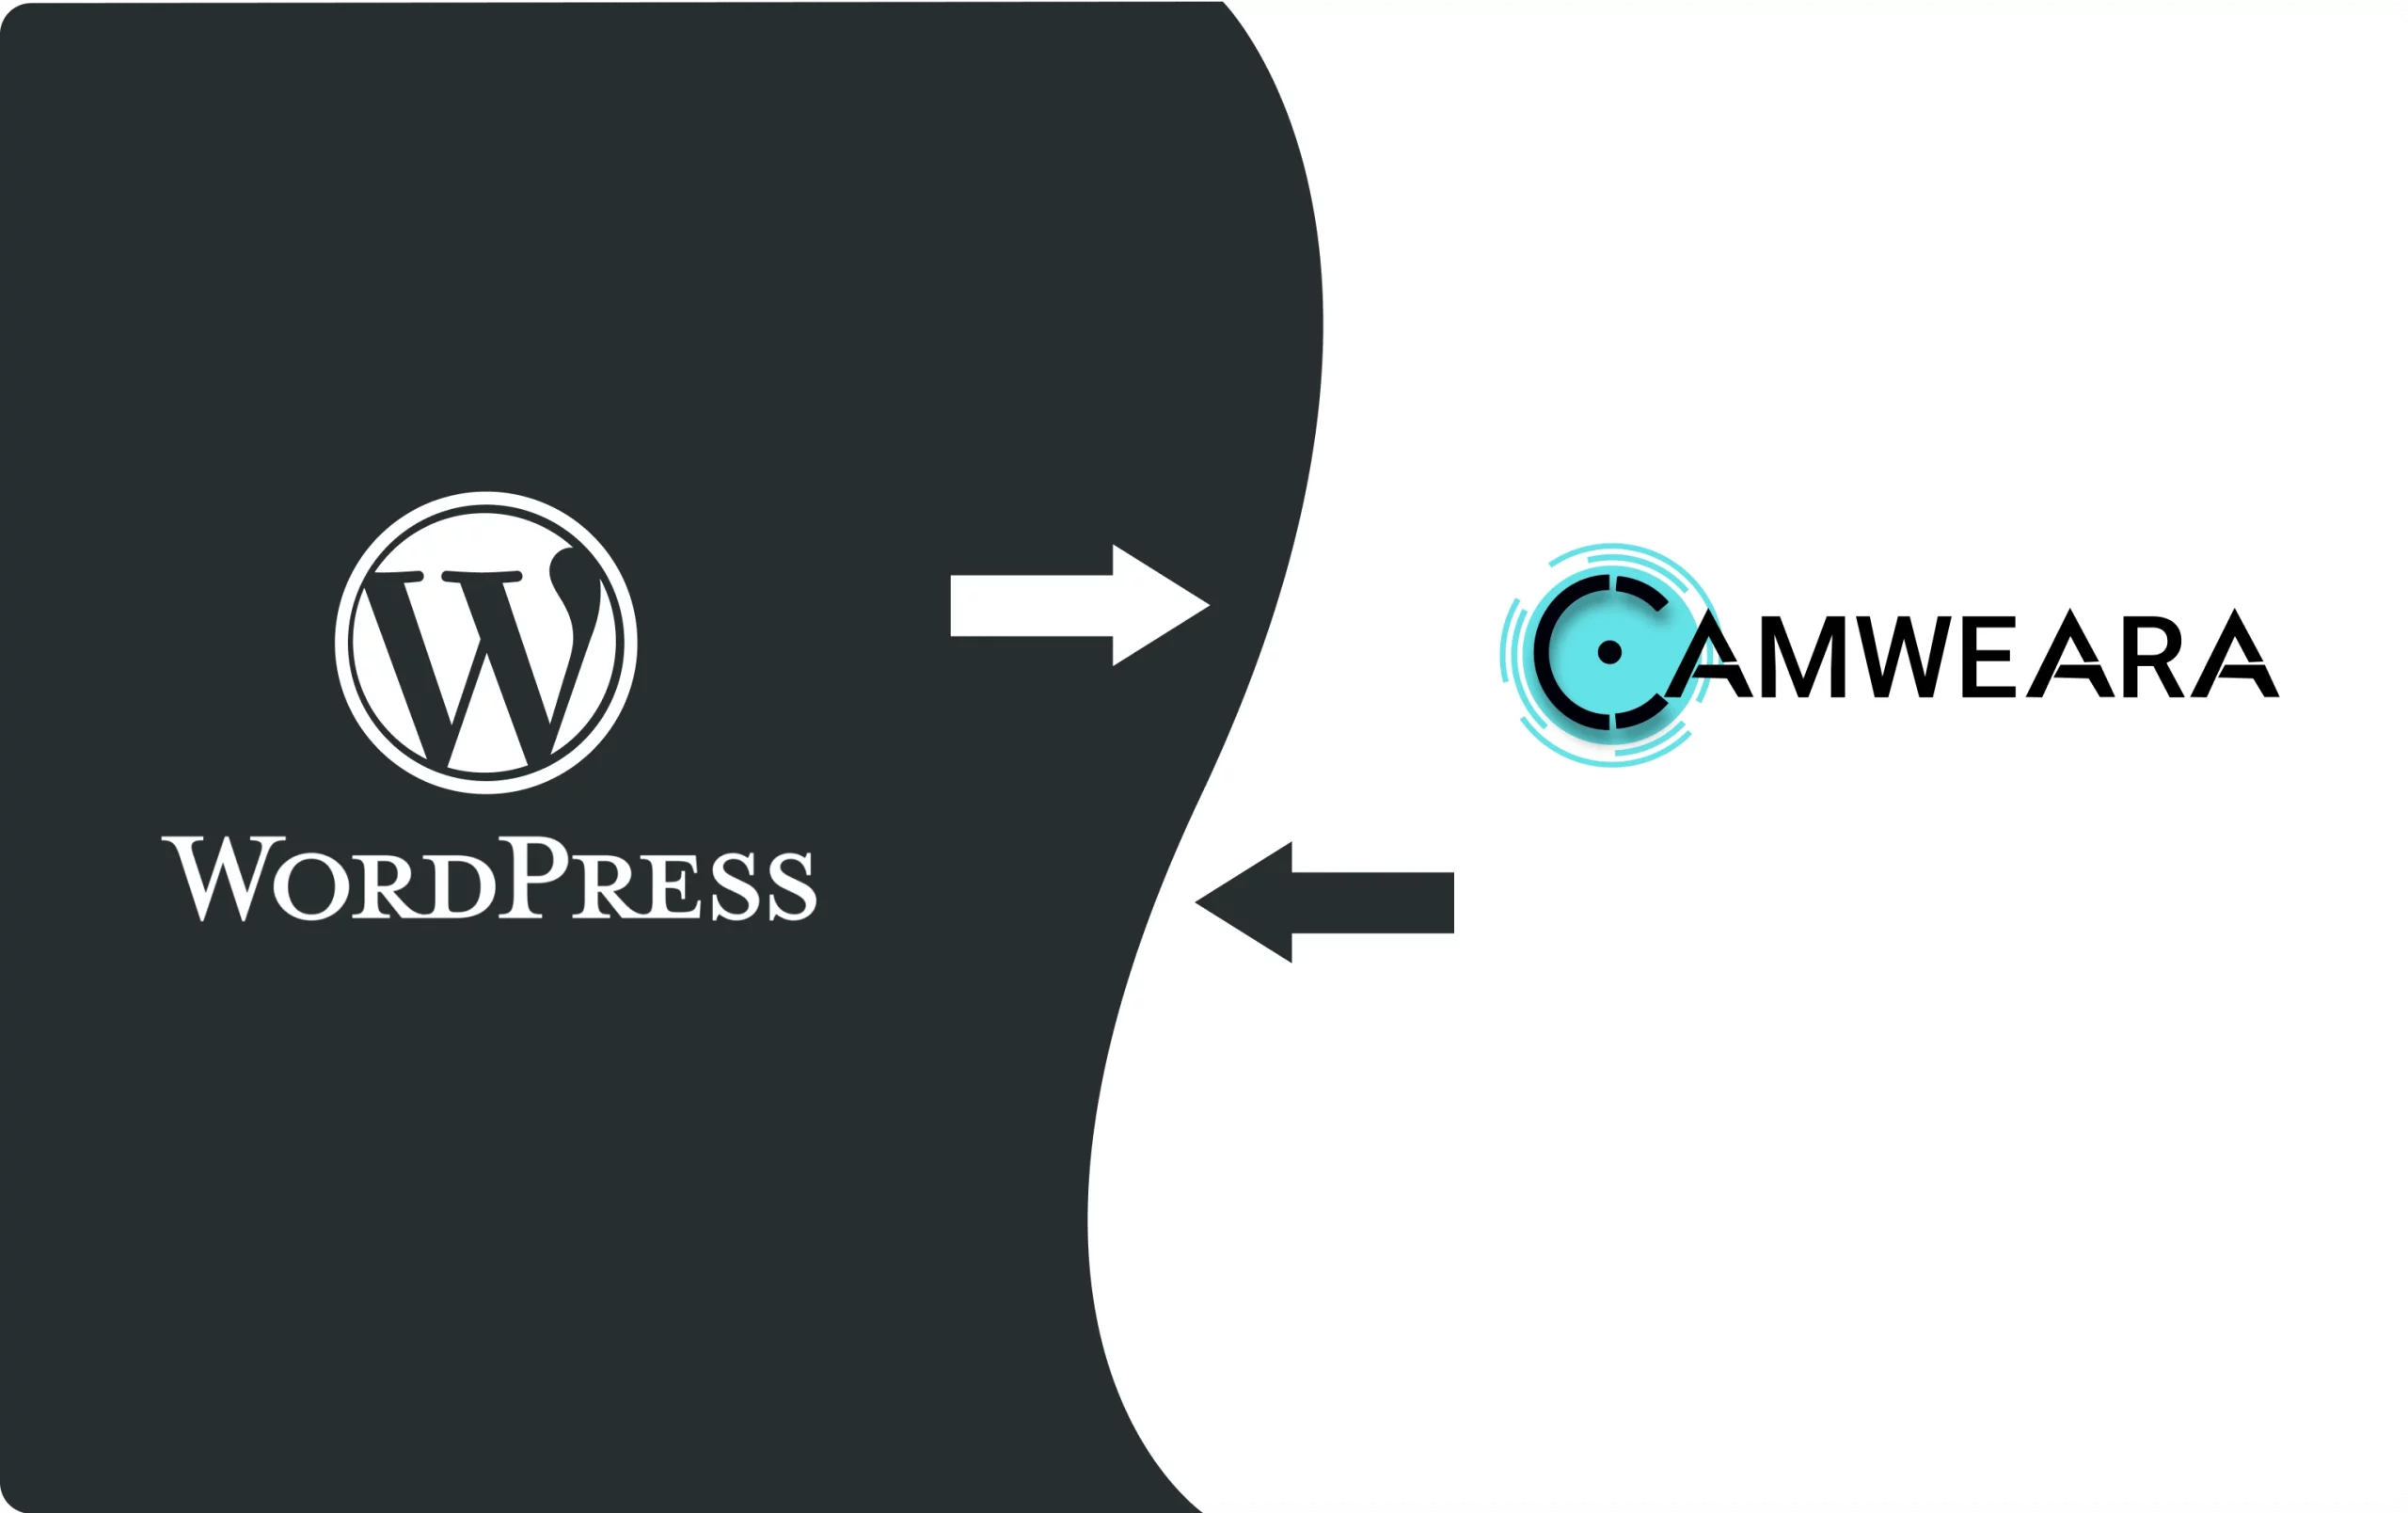 WordPress and camweara virtual try-on logos